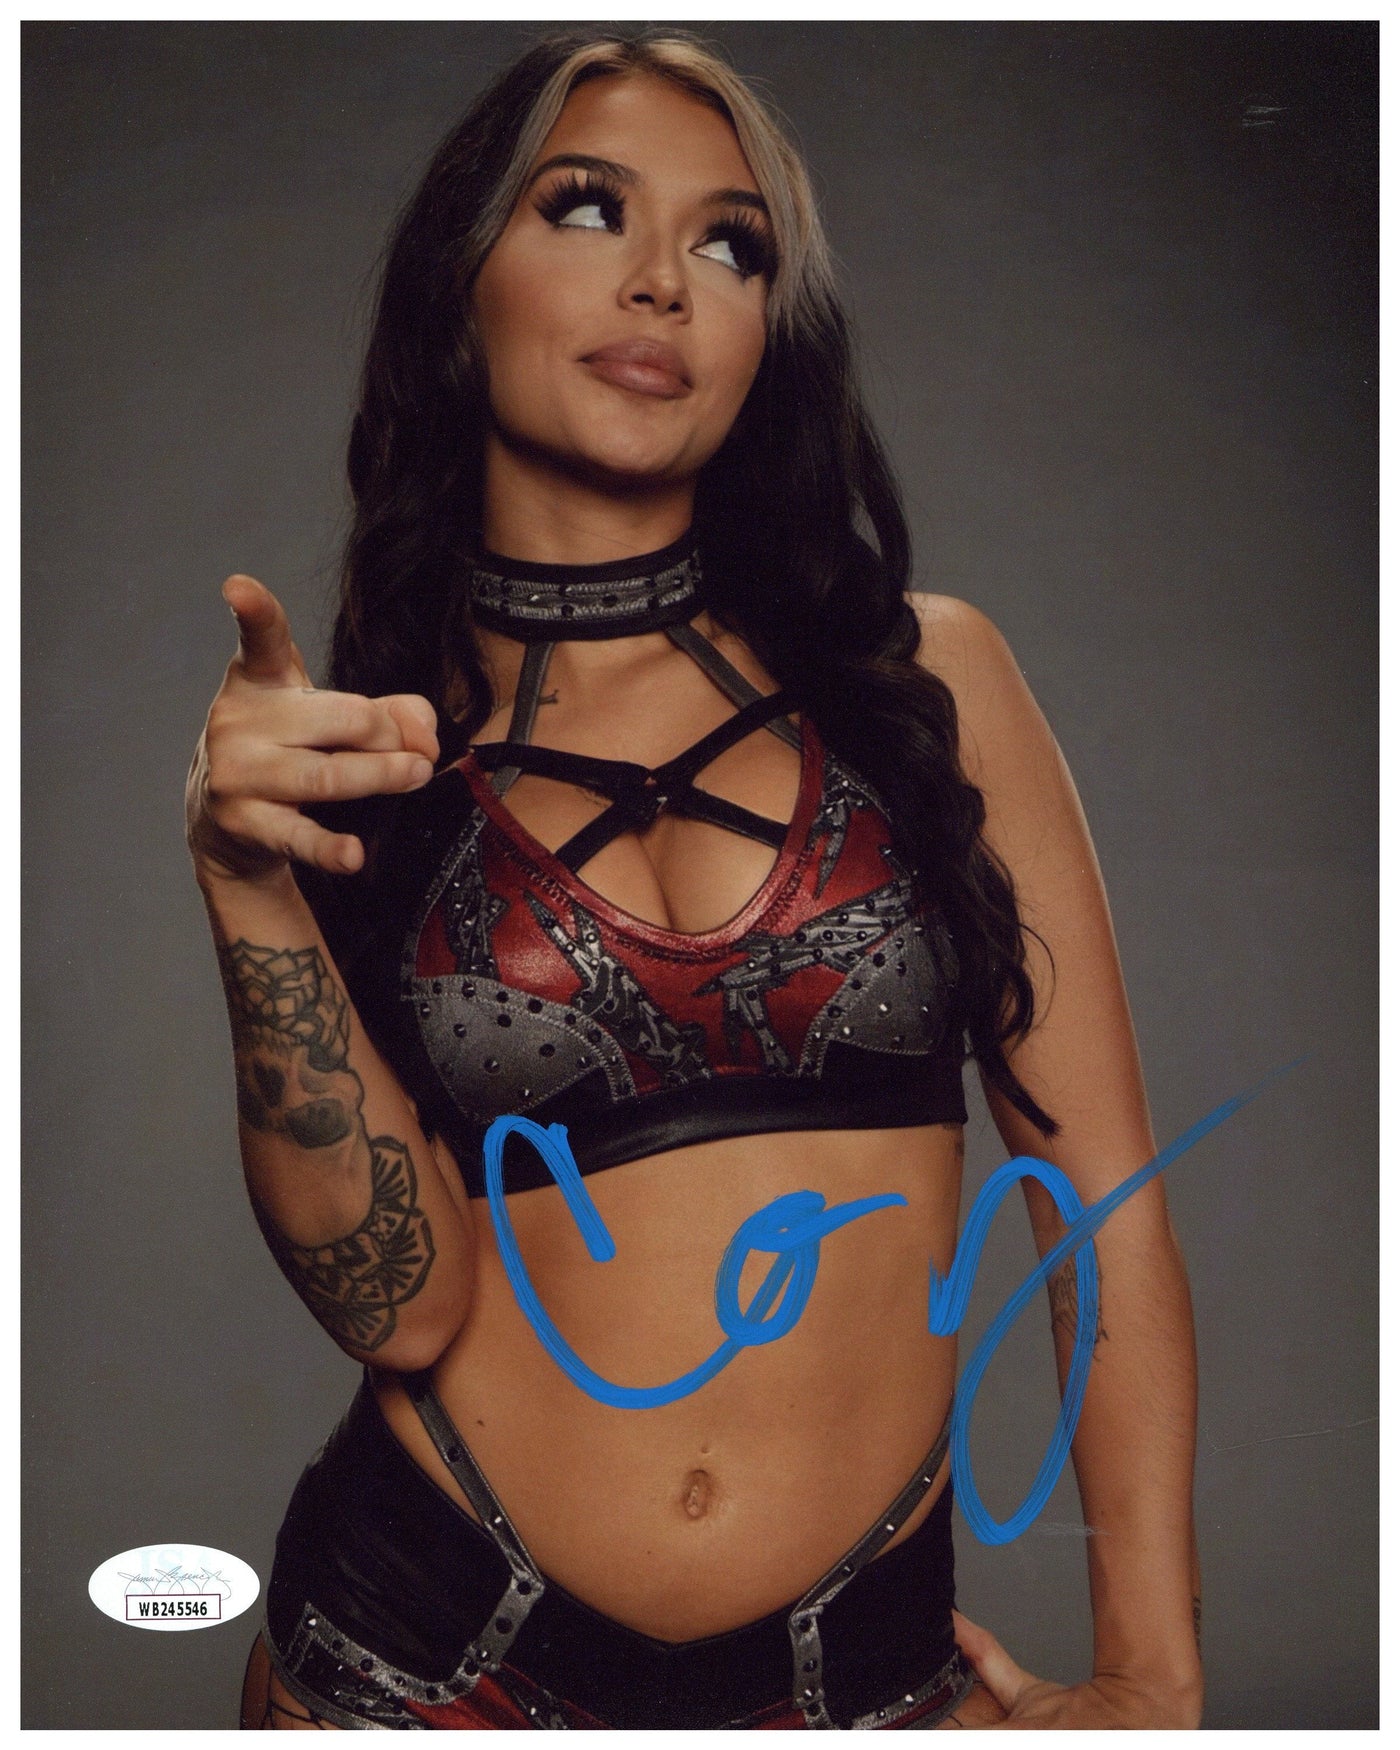 Cora Jade Signed 8x10 Photo WWE NXT Pro Wrestling Autograph JSA COA 2